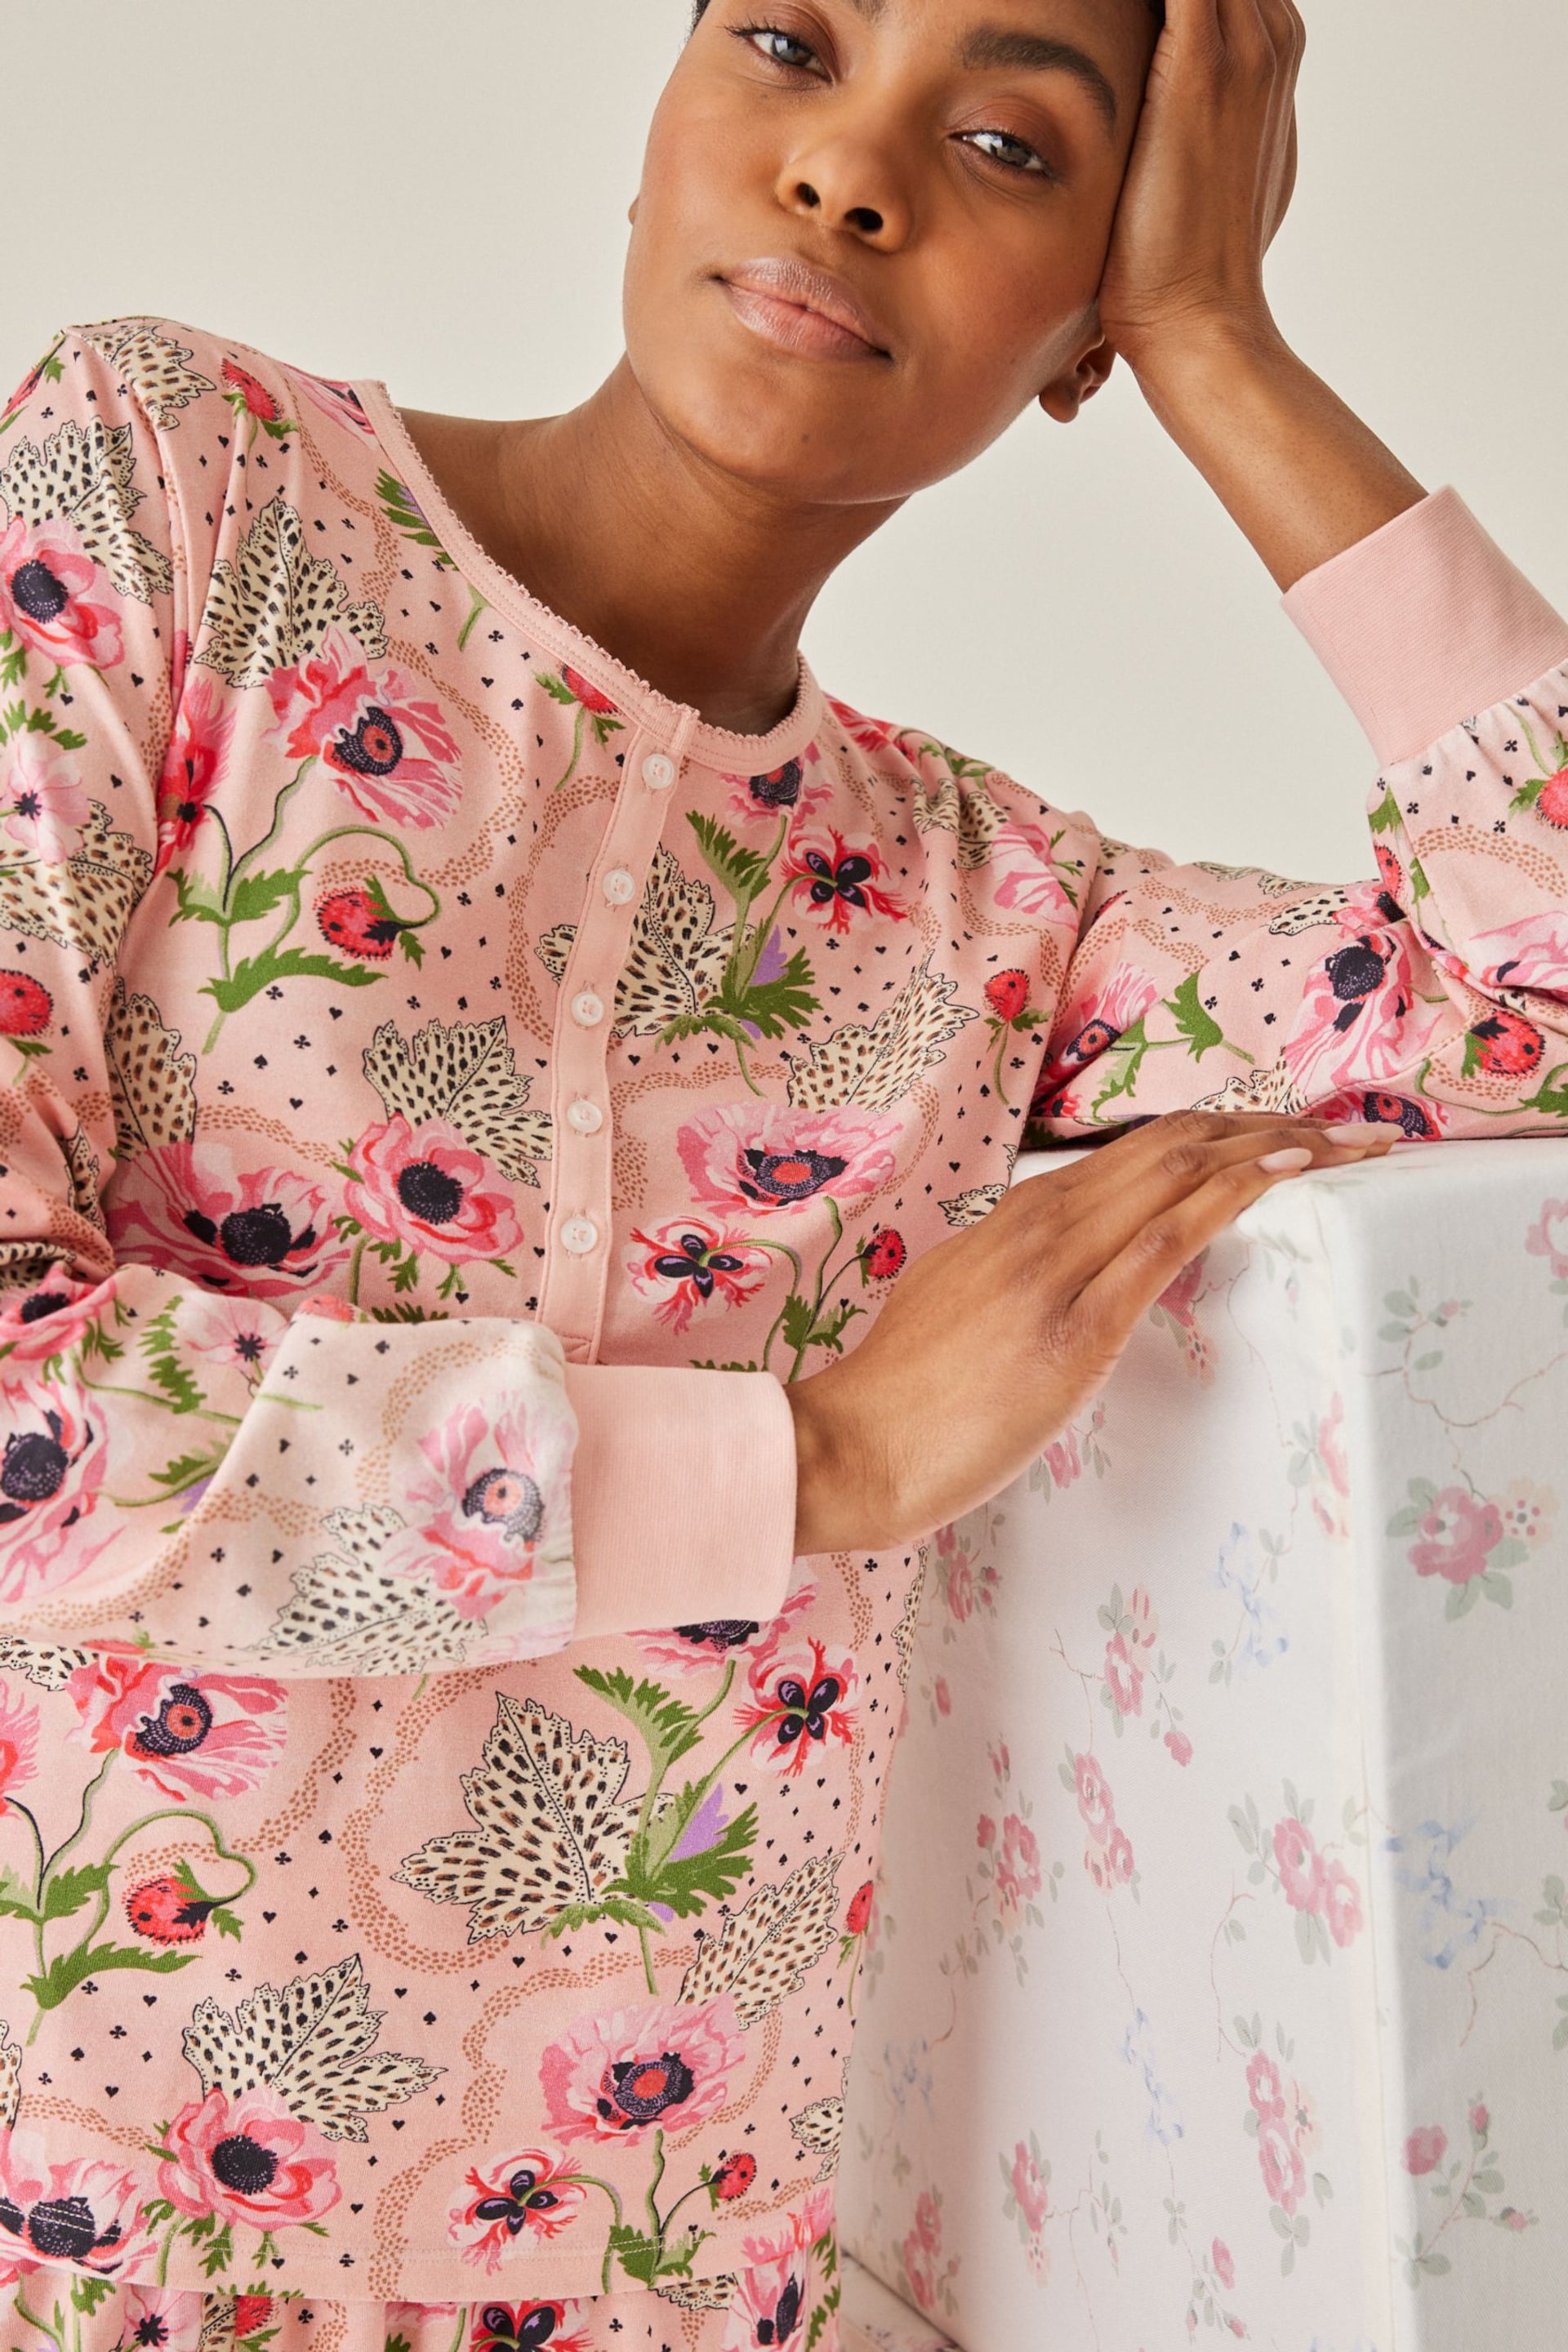 Cath Kidston Pink Floral Print Cotton Henley Pyjamas - Image 3 of 12